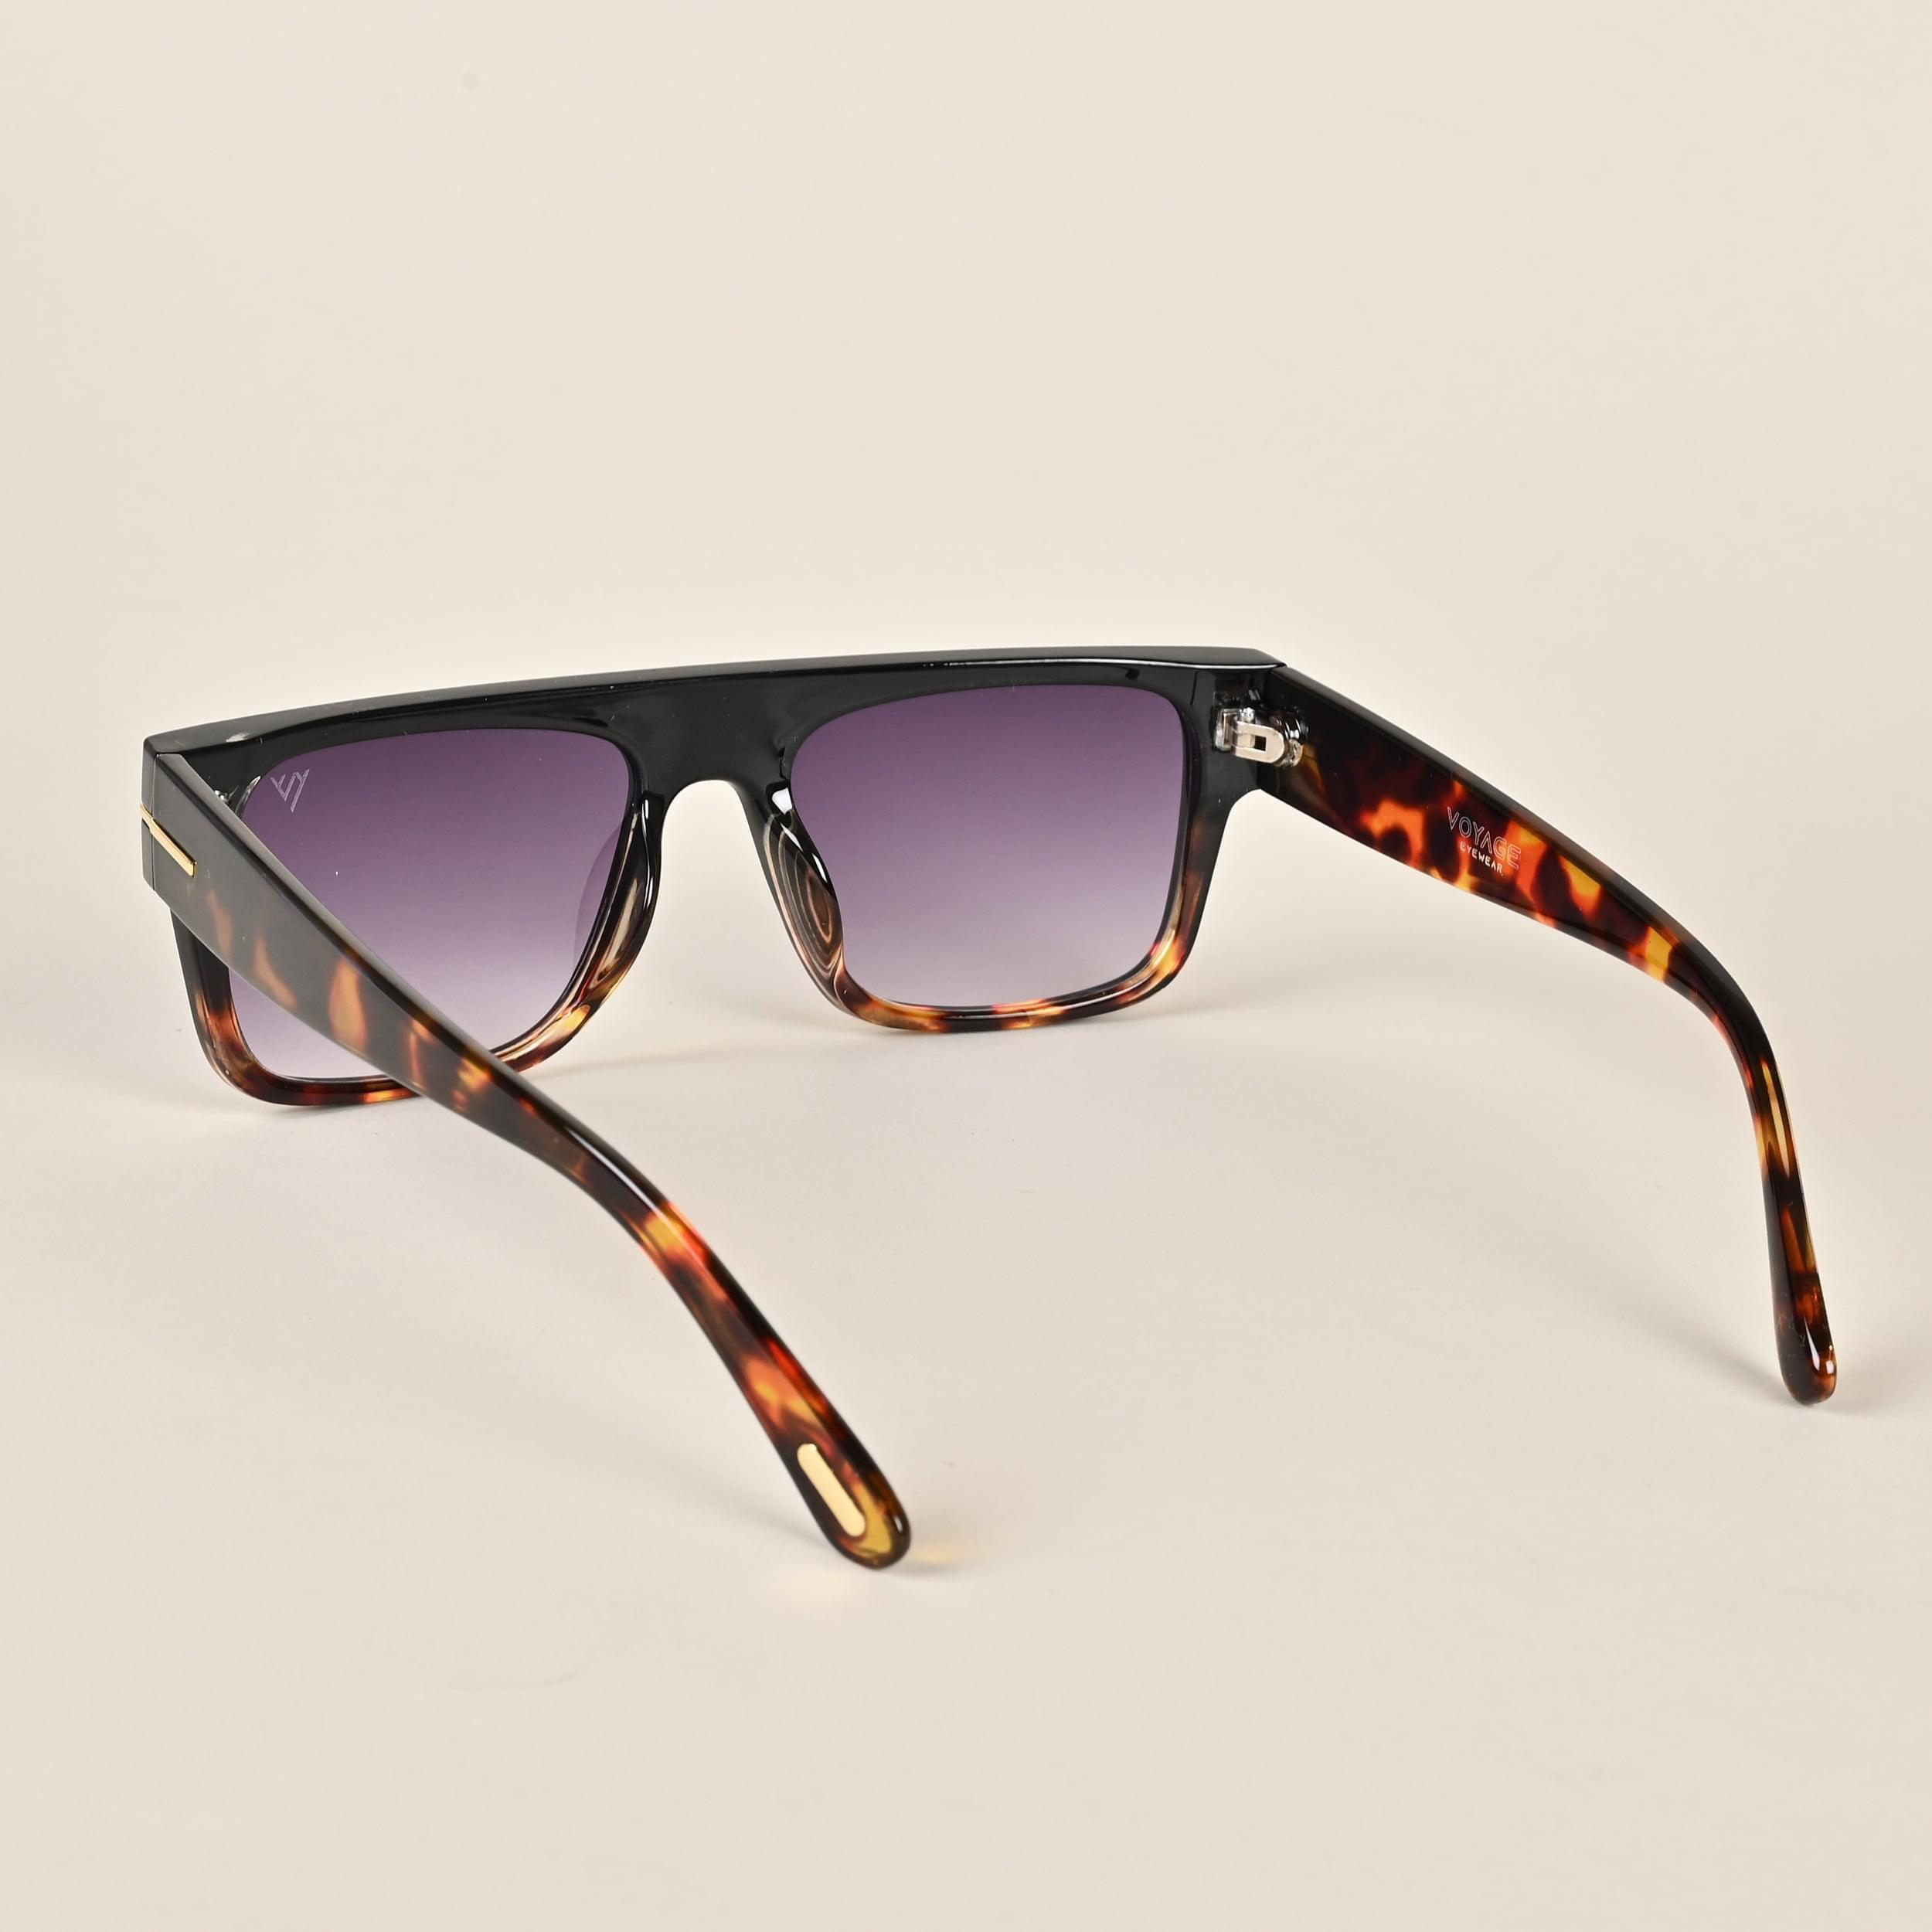 Voyage Black & Brown Wayfarer Sunglasses - MG3934